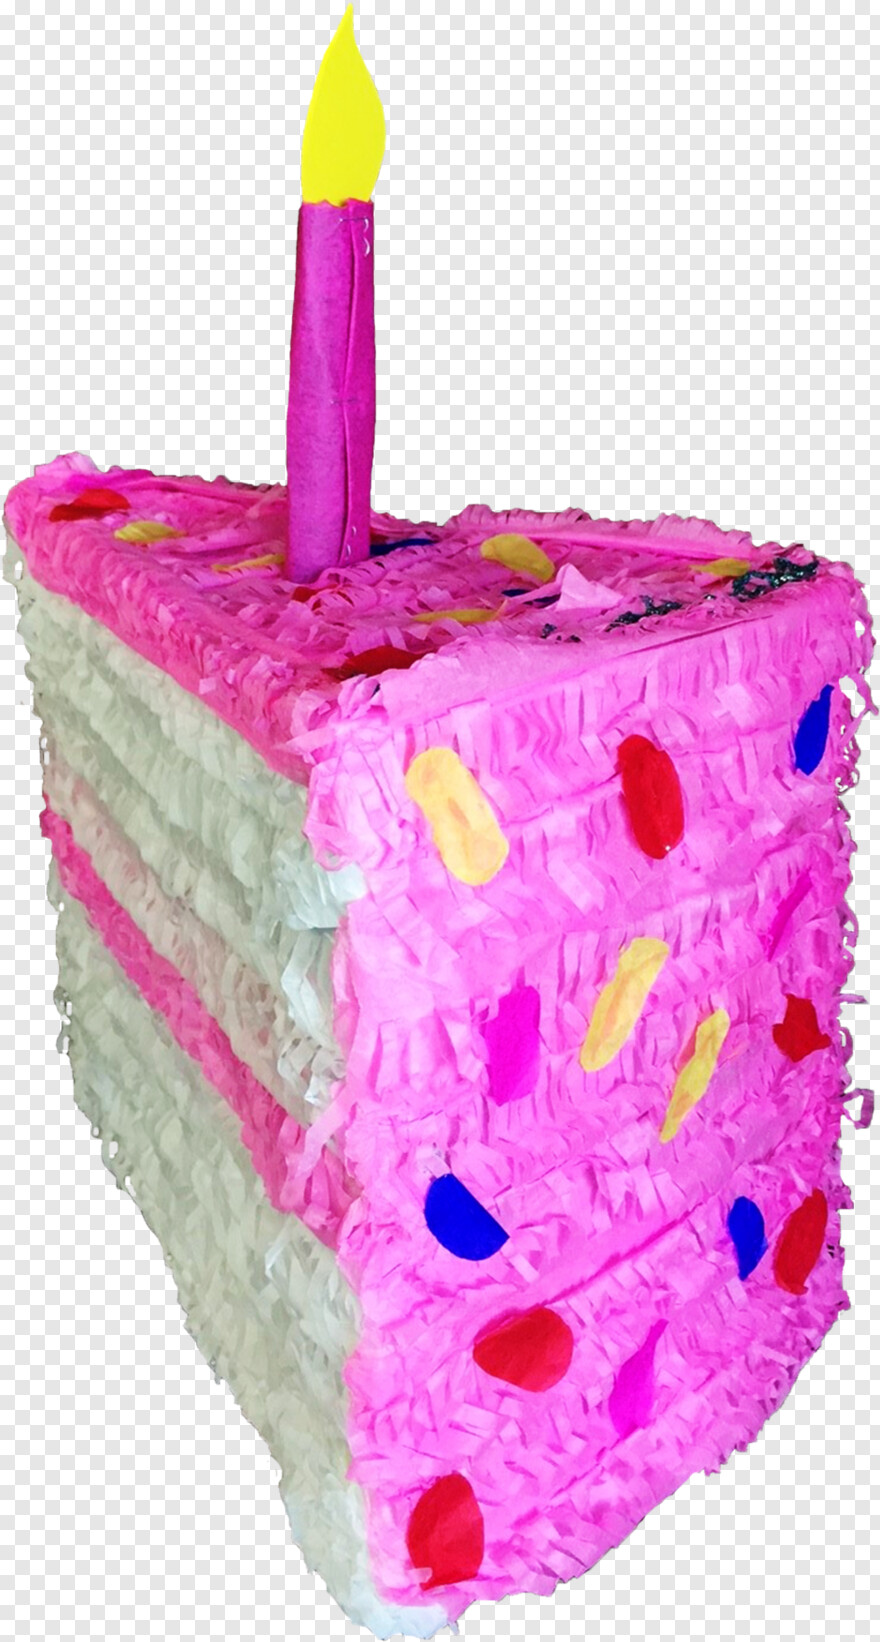 birthday-cake # 359448